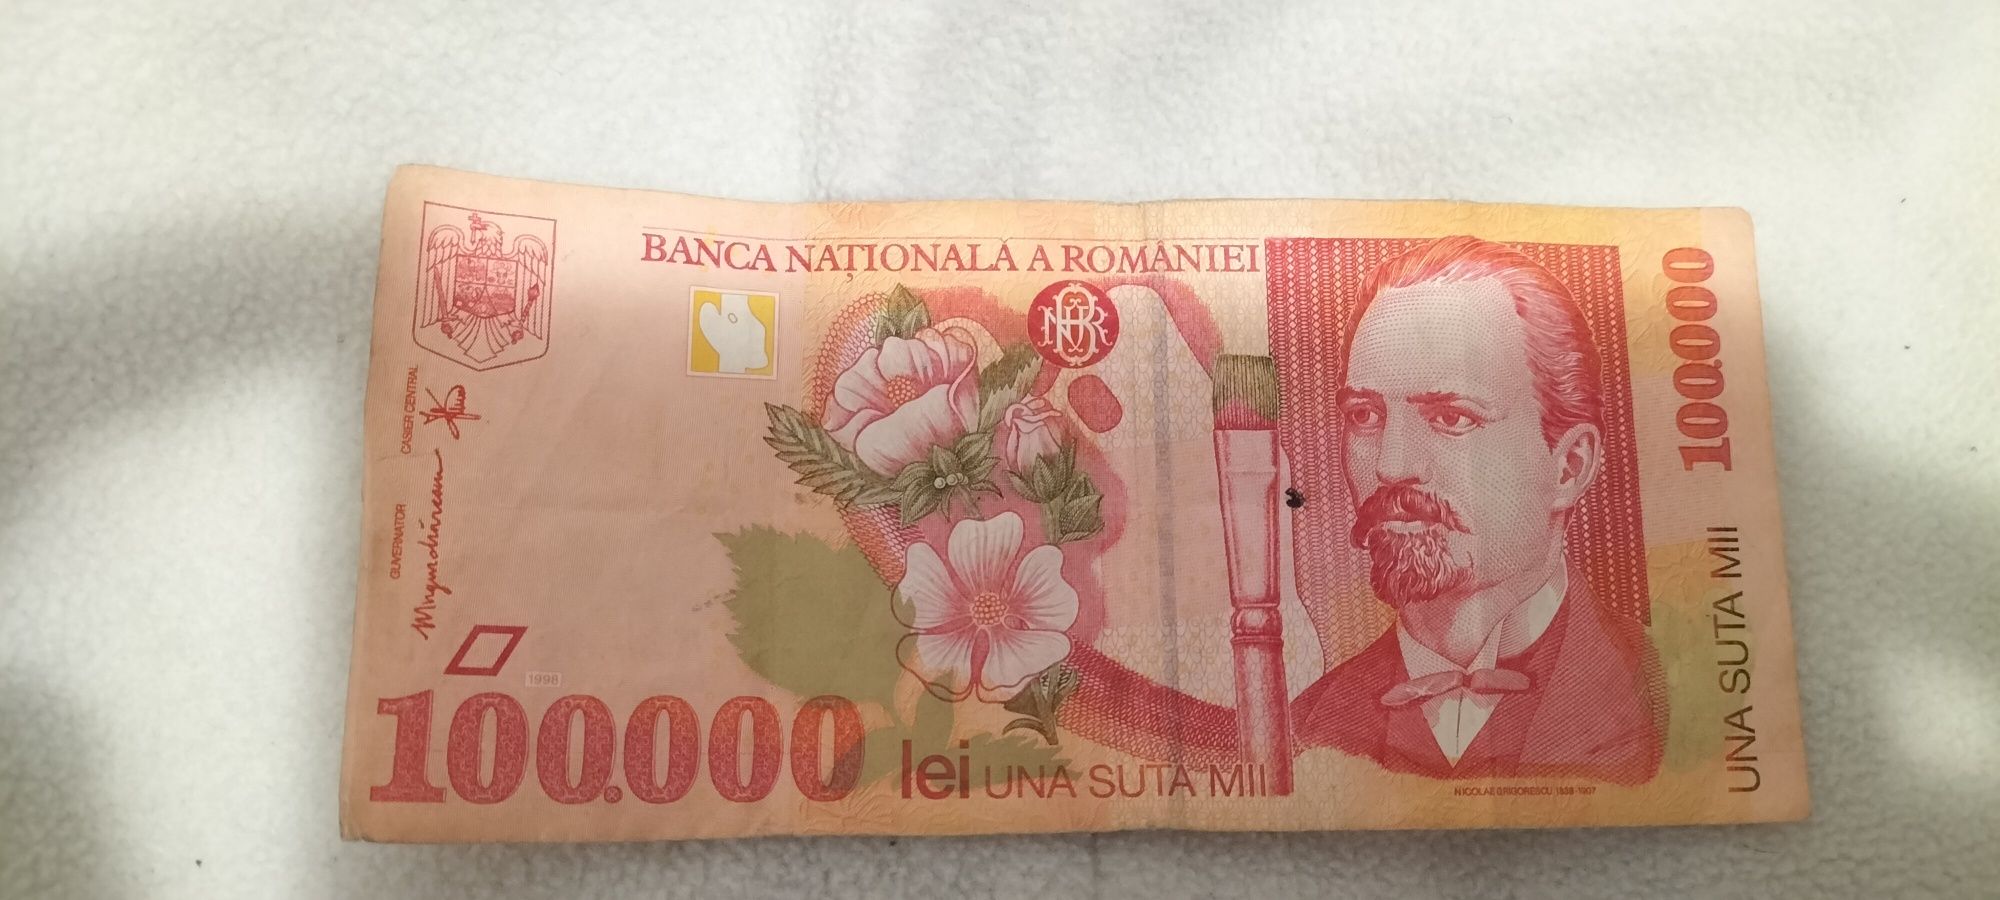 Bancnota de 100,000 lei Nicolae Grigorescu emisa in 1998 Seria A!